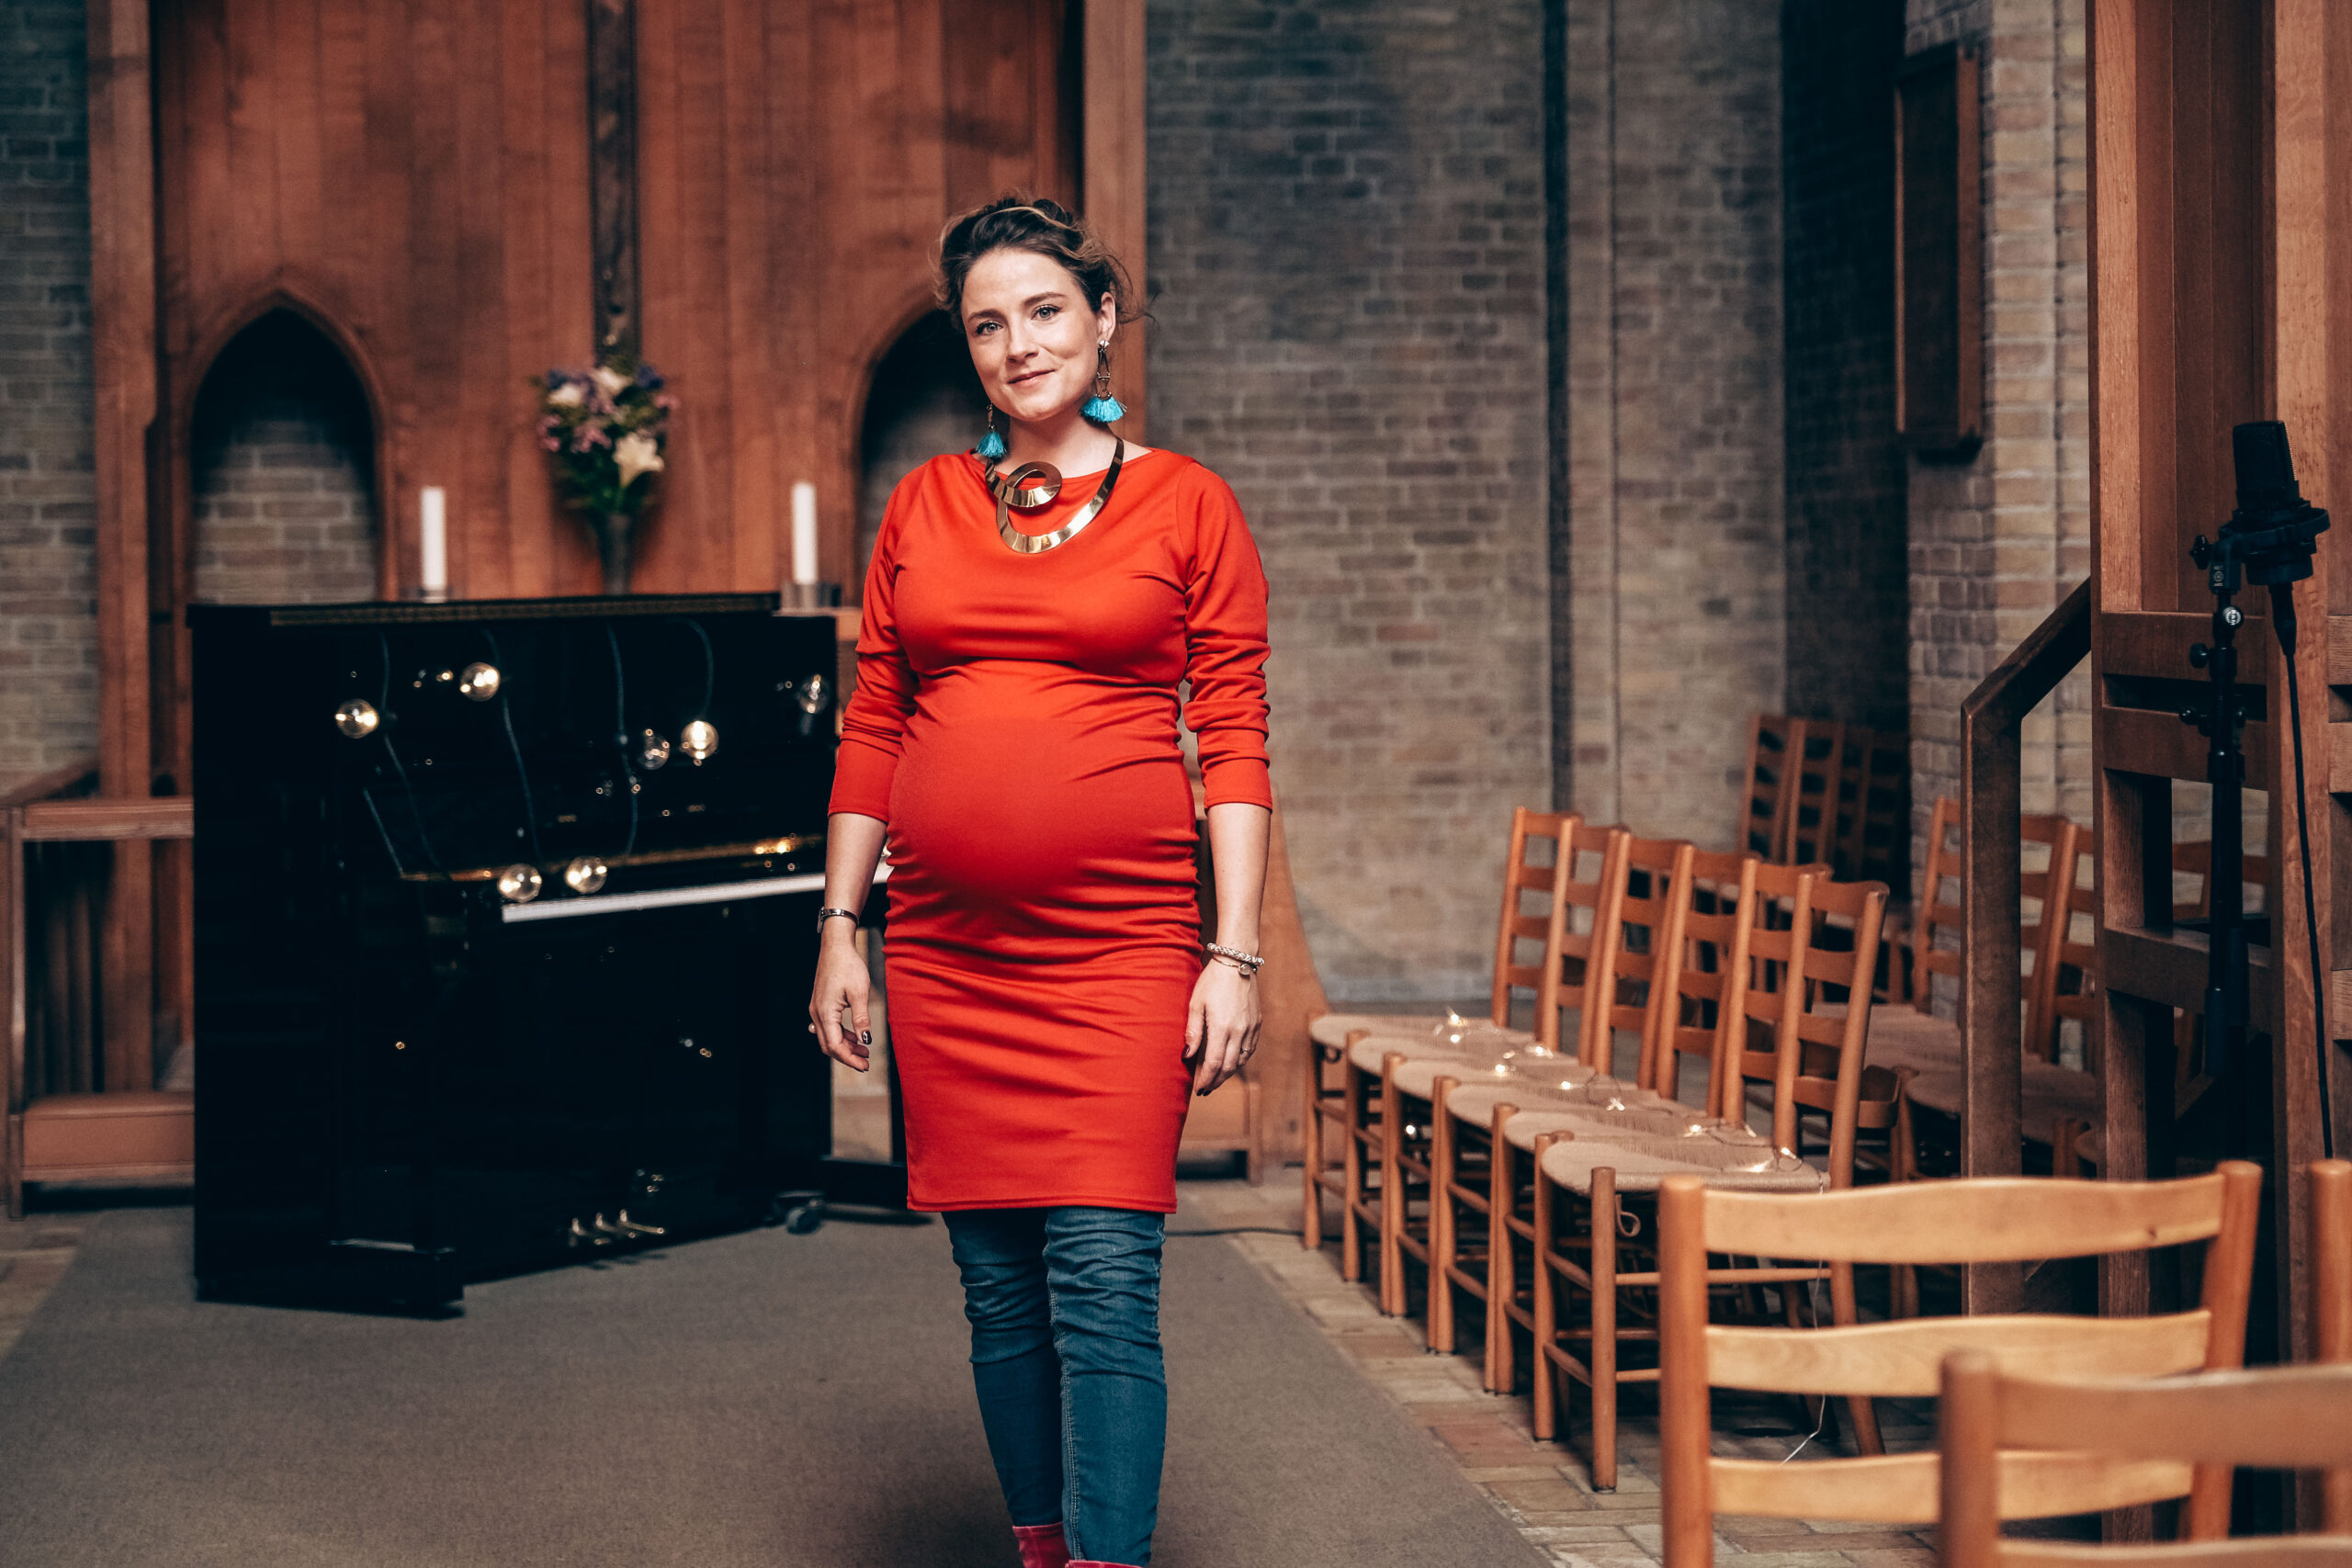 sangerinde klassisk opera til fest vielser kirkerum kirke vielser smukt dansk romantisk rød kjole